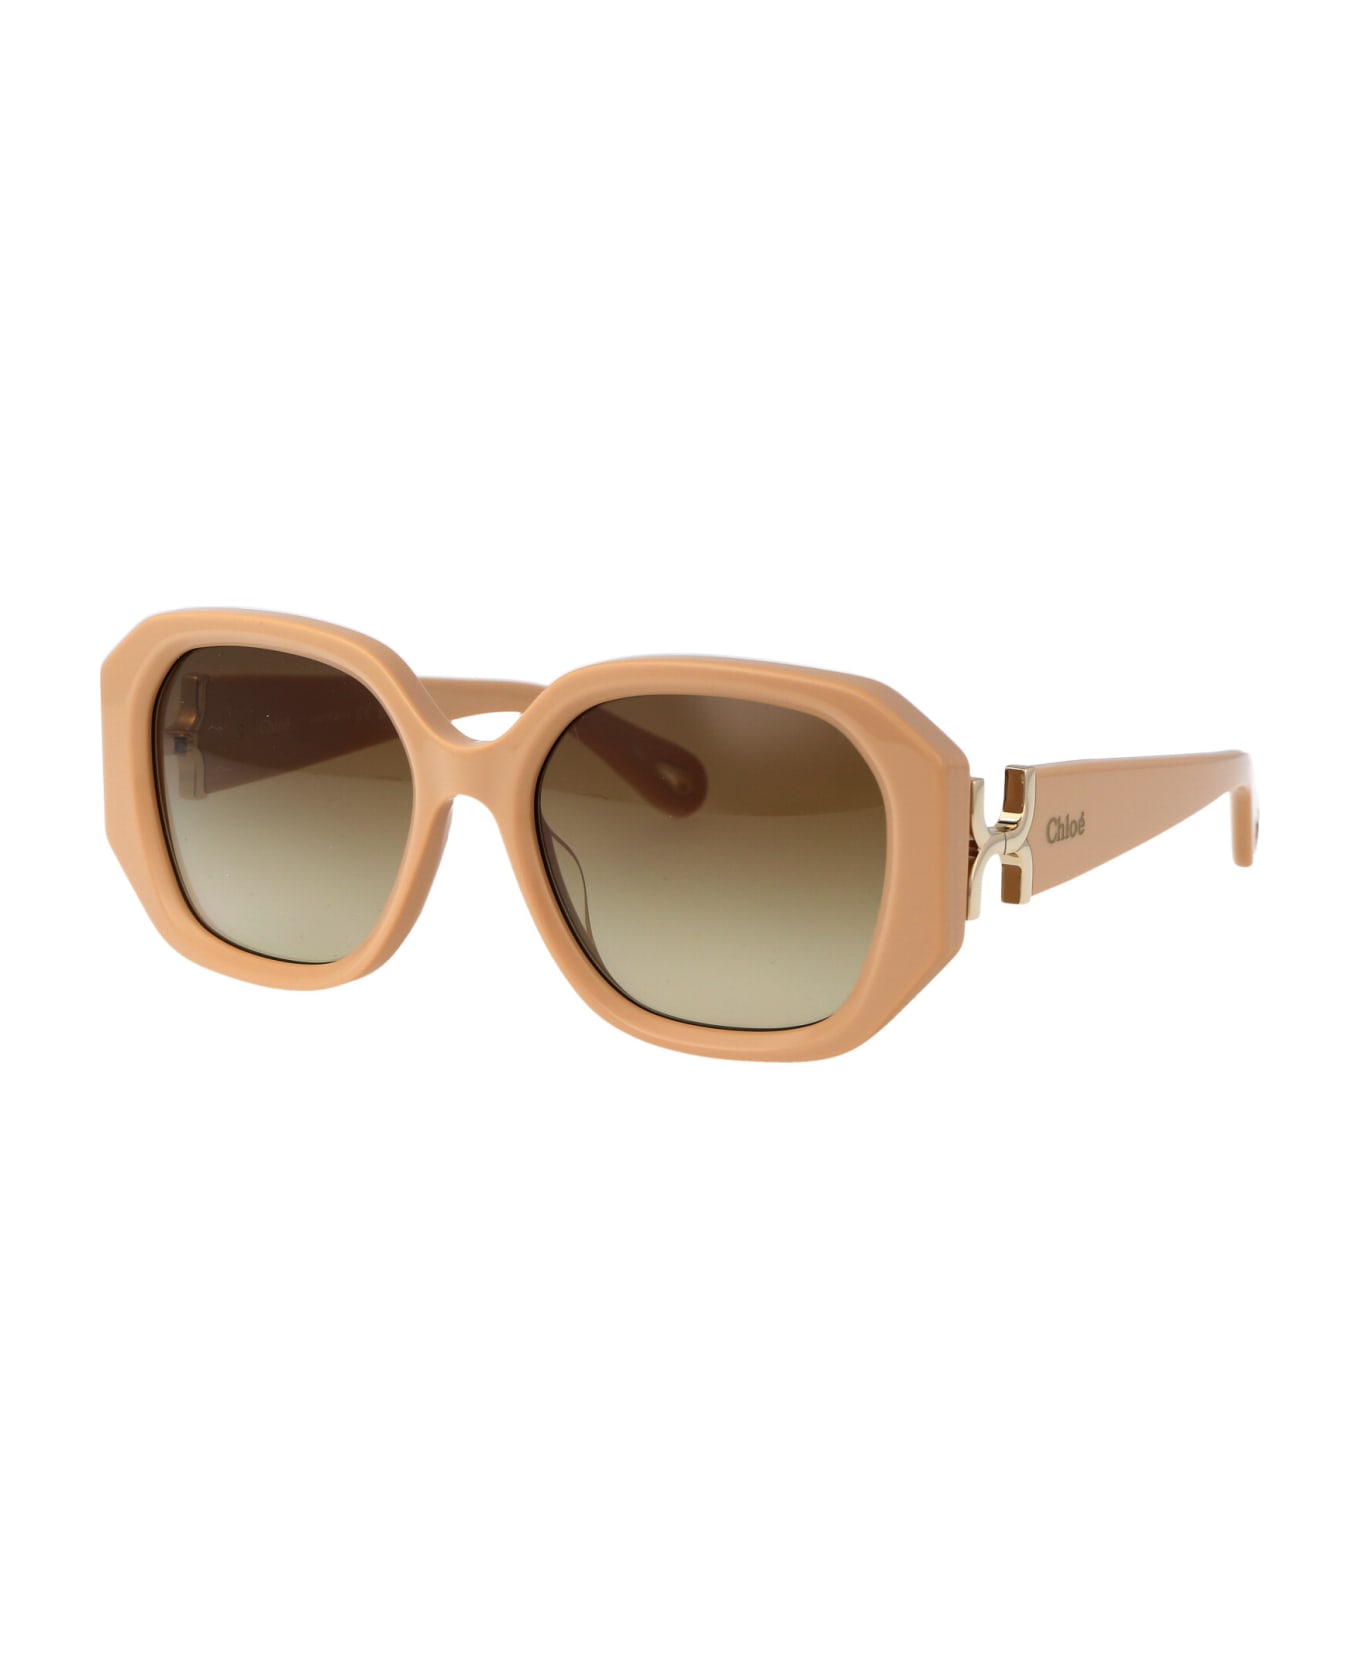 Chloé Eyewear Ch0236s Sunglasses - 004 IVORY IVORY BROWN サングラス